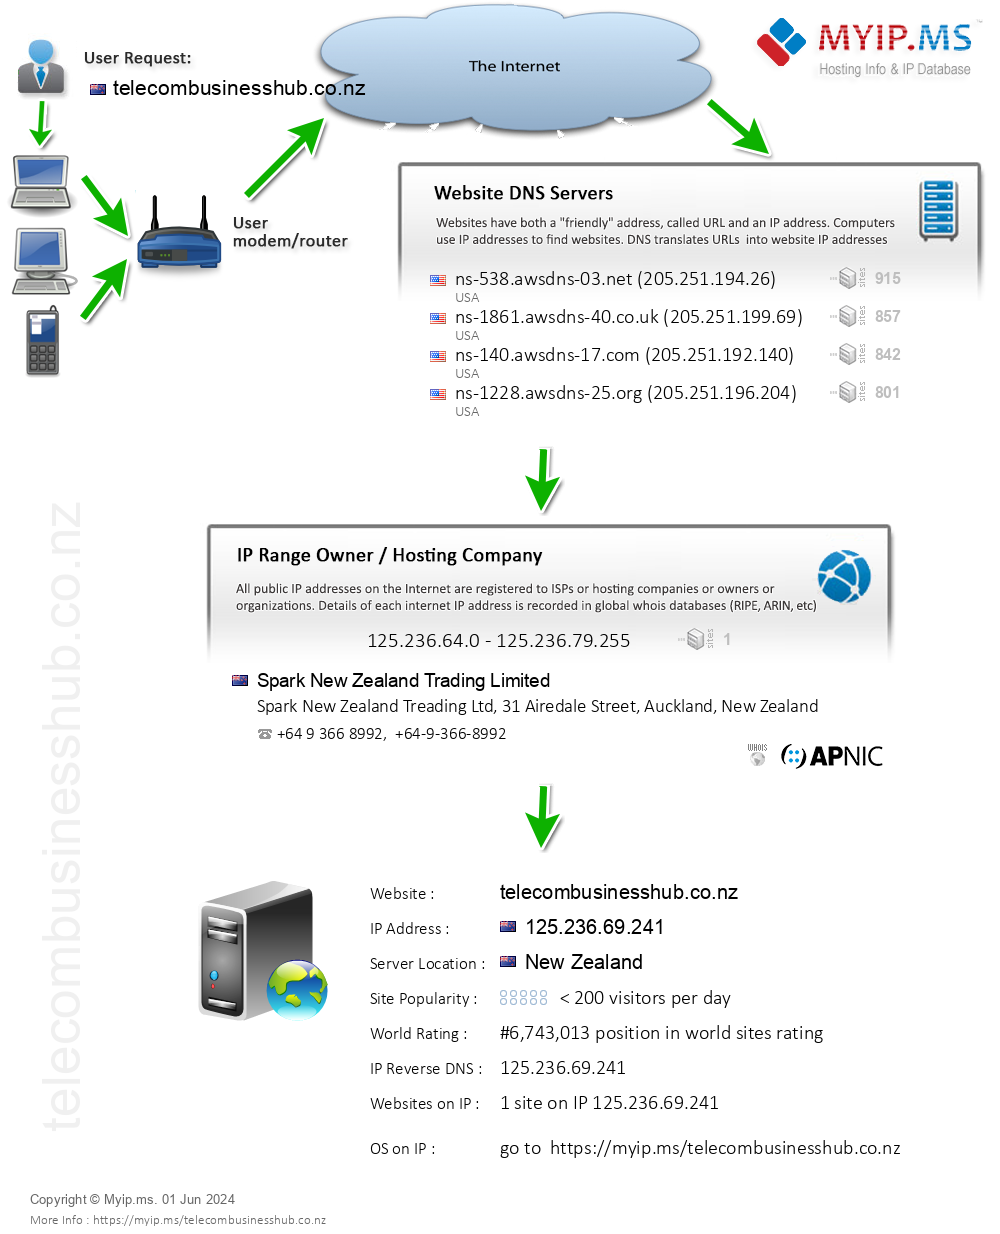 Telecombusinesshub.co.nz - Website Hosting Visual IP Diagram